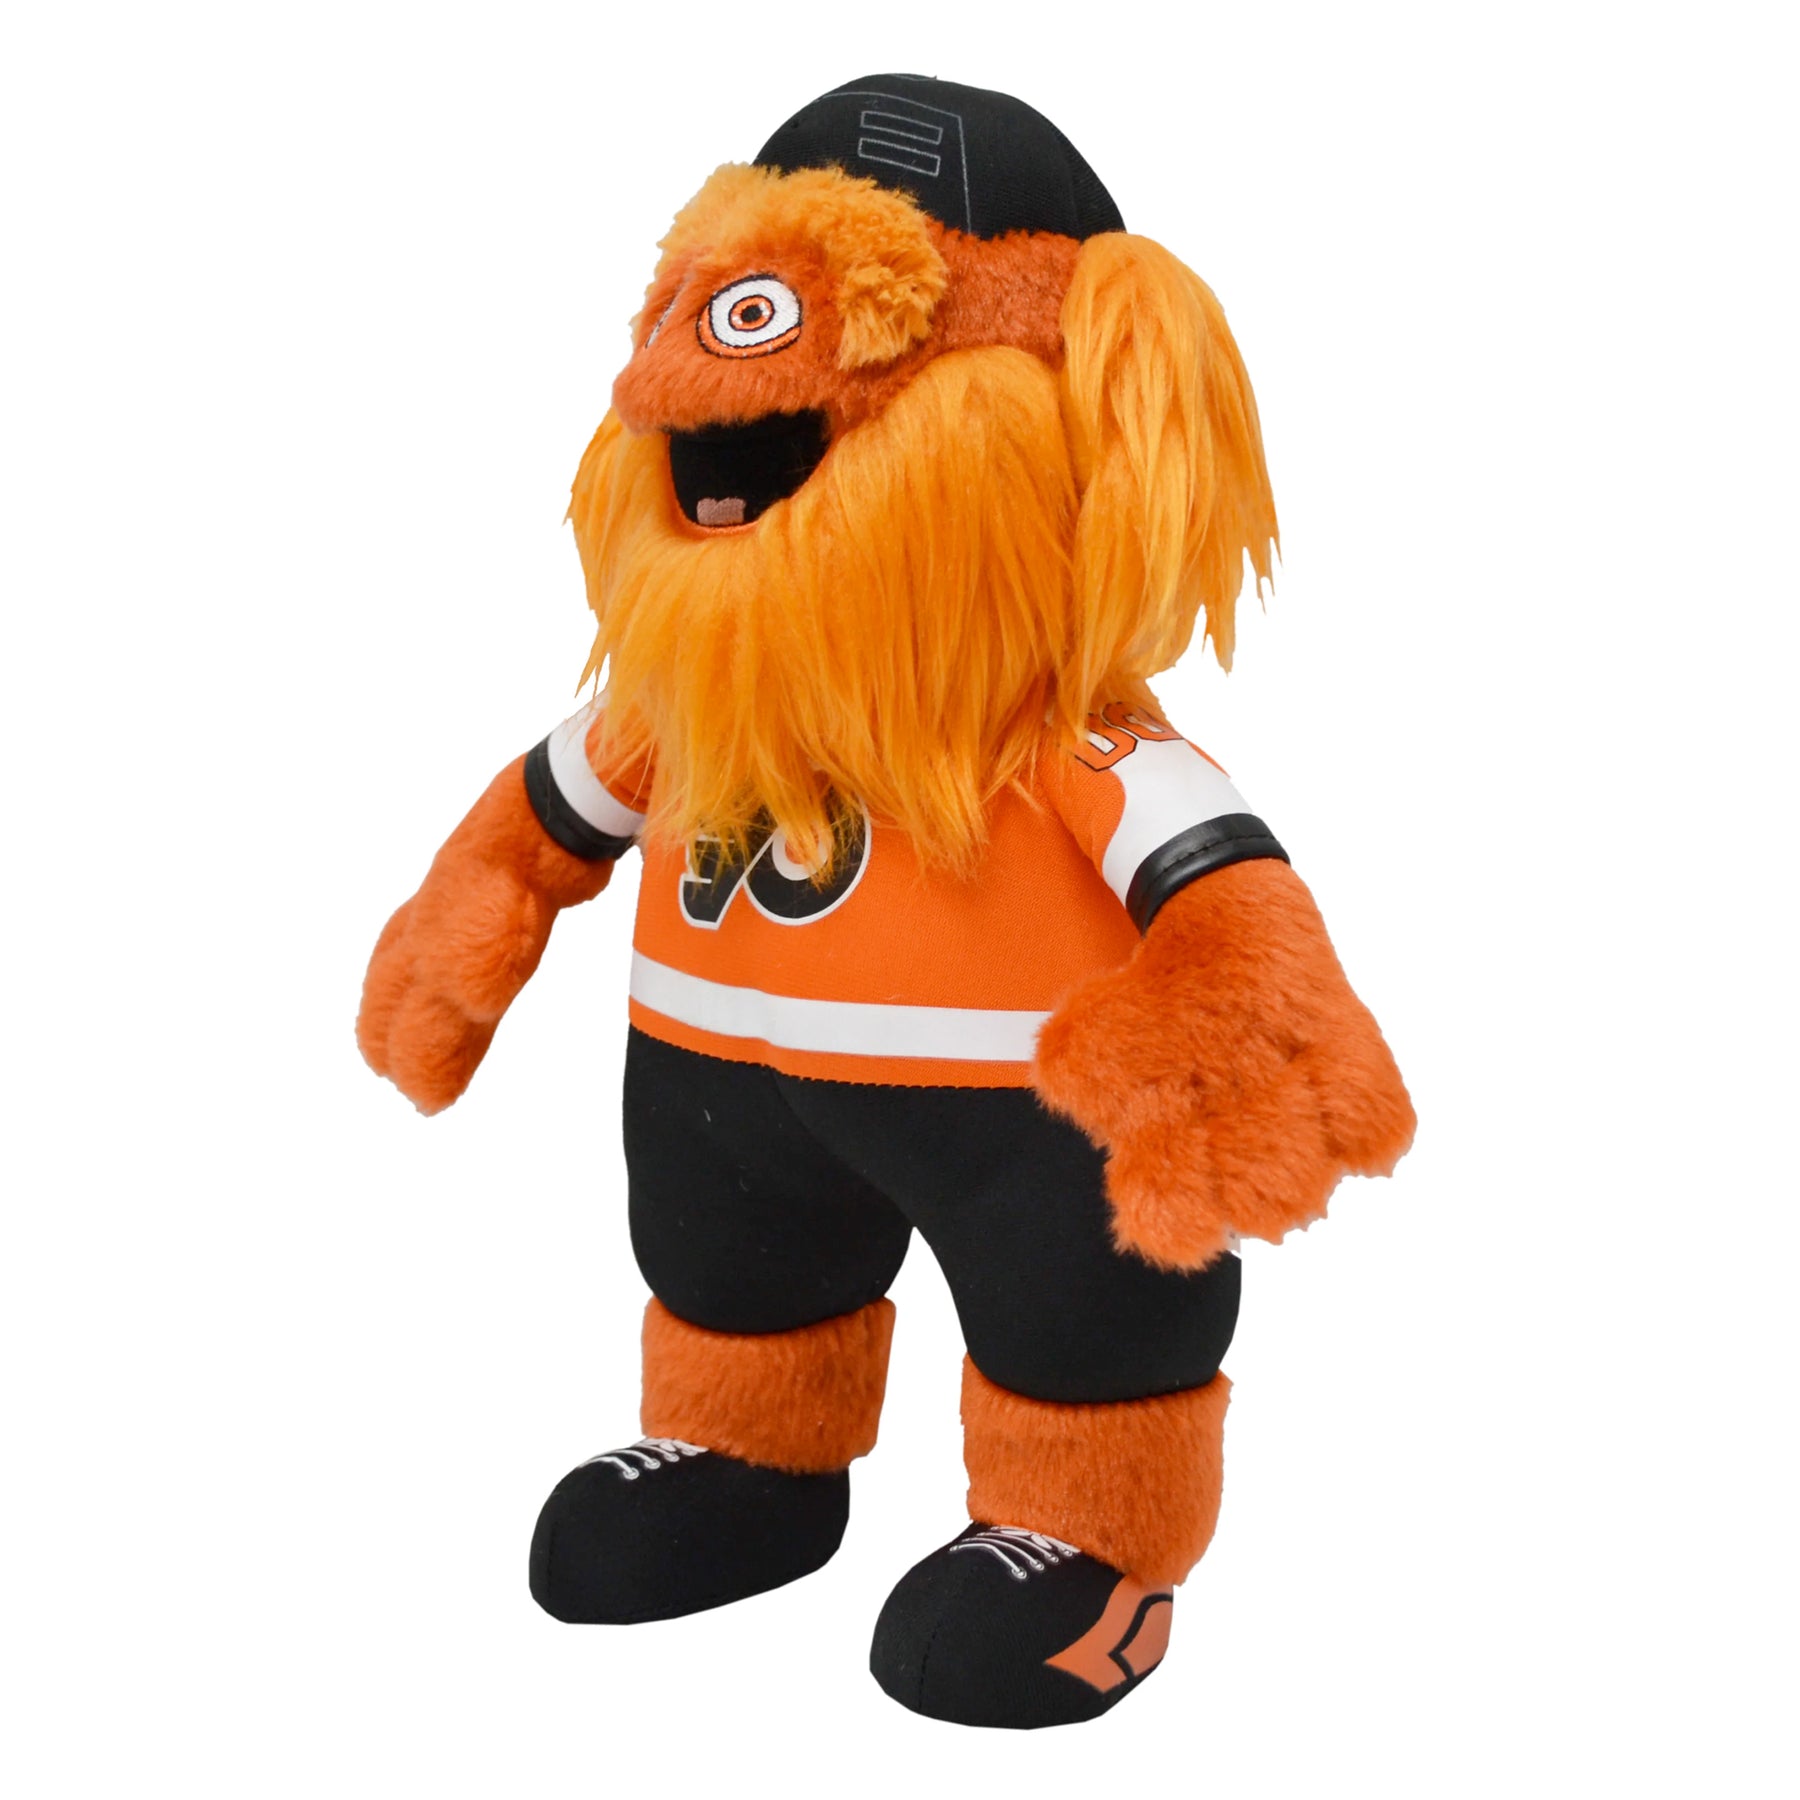 Philadelphia Flyers Mascot Gritty Plush Toy